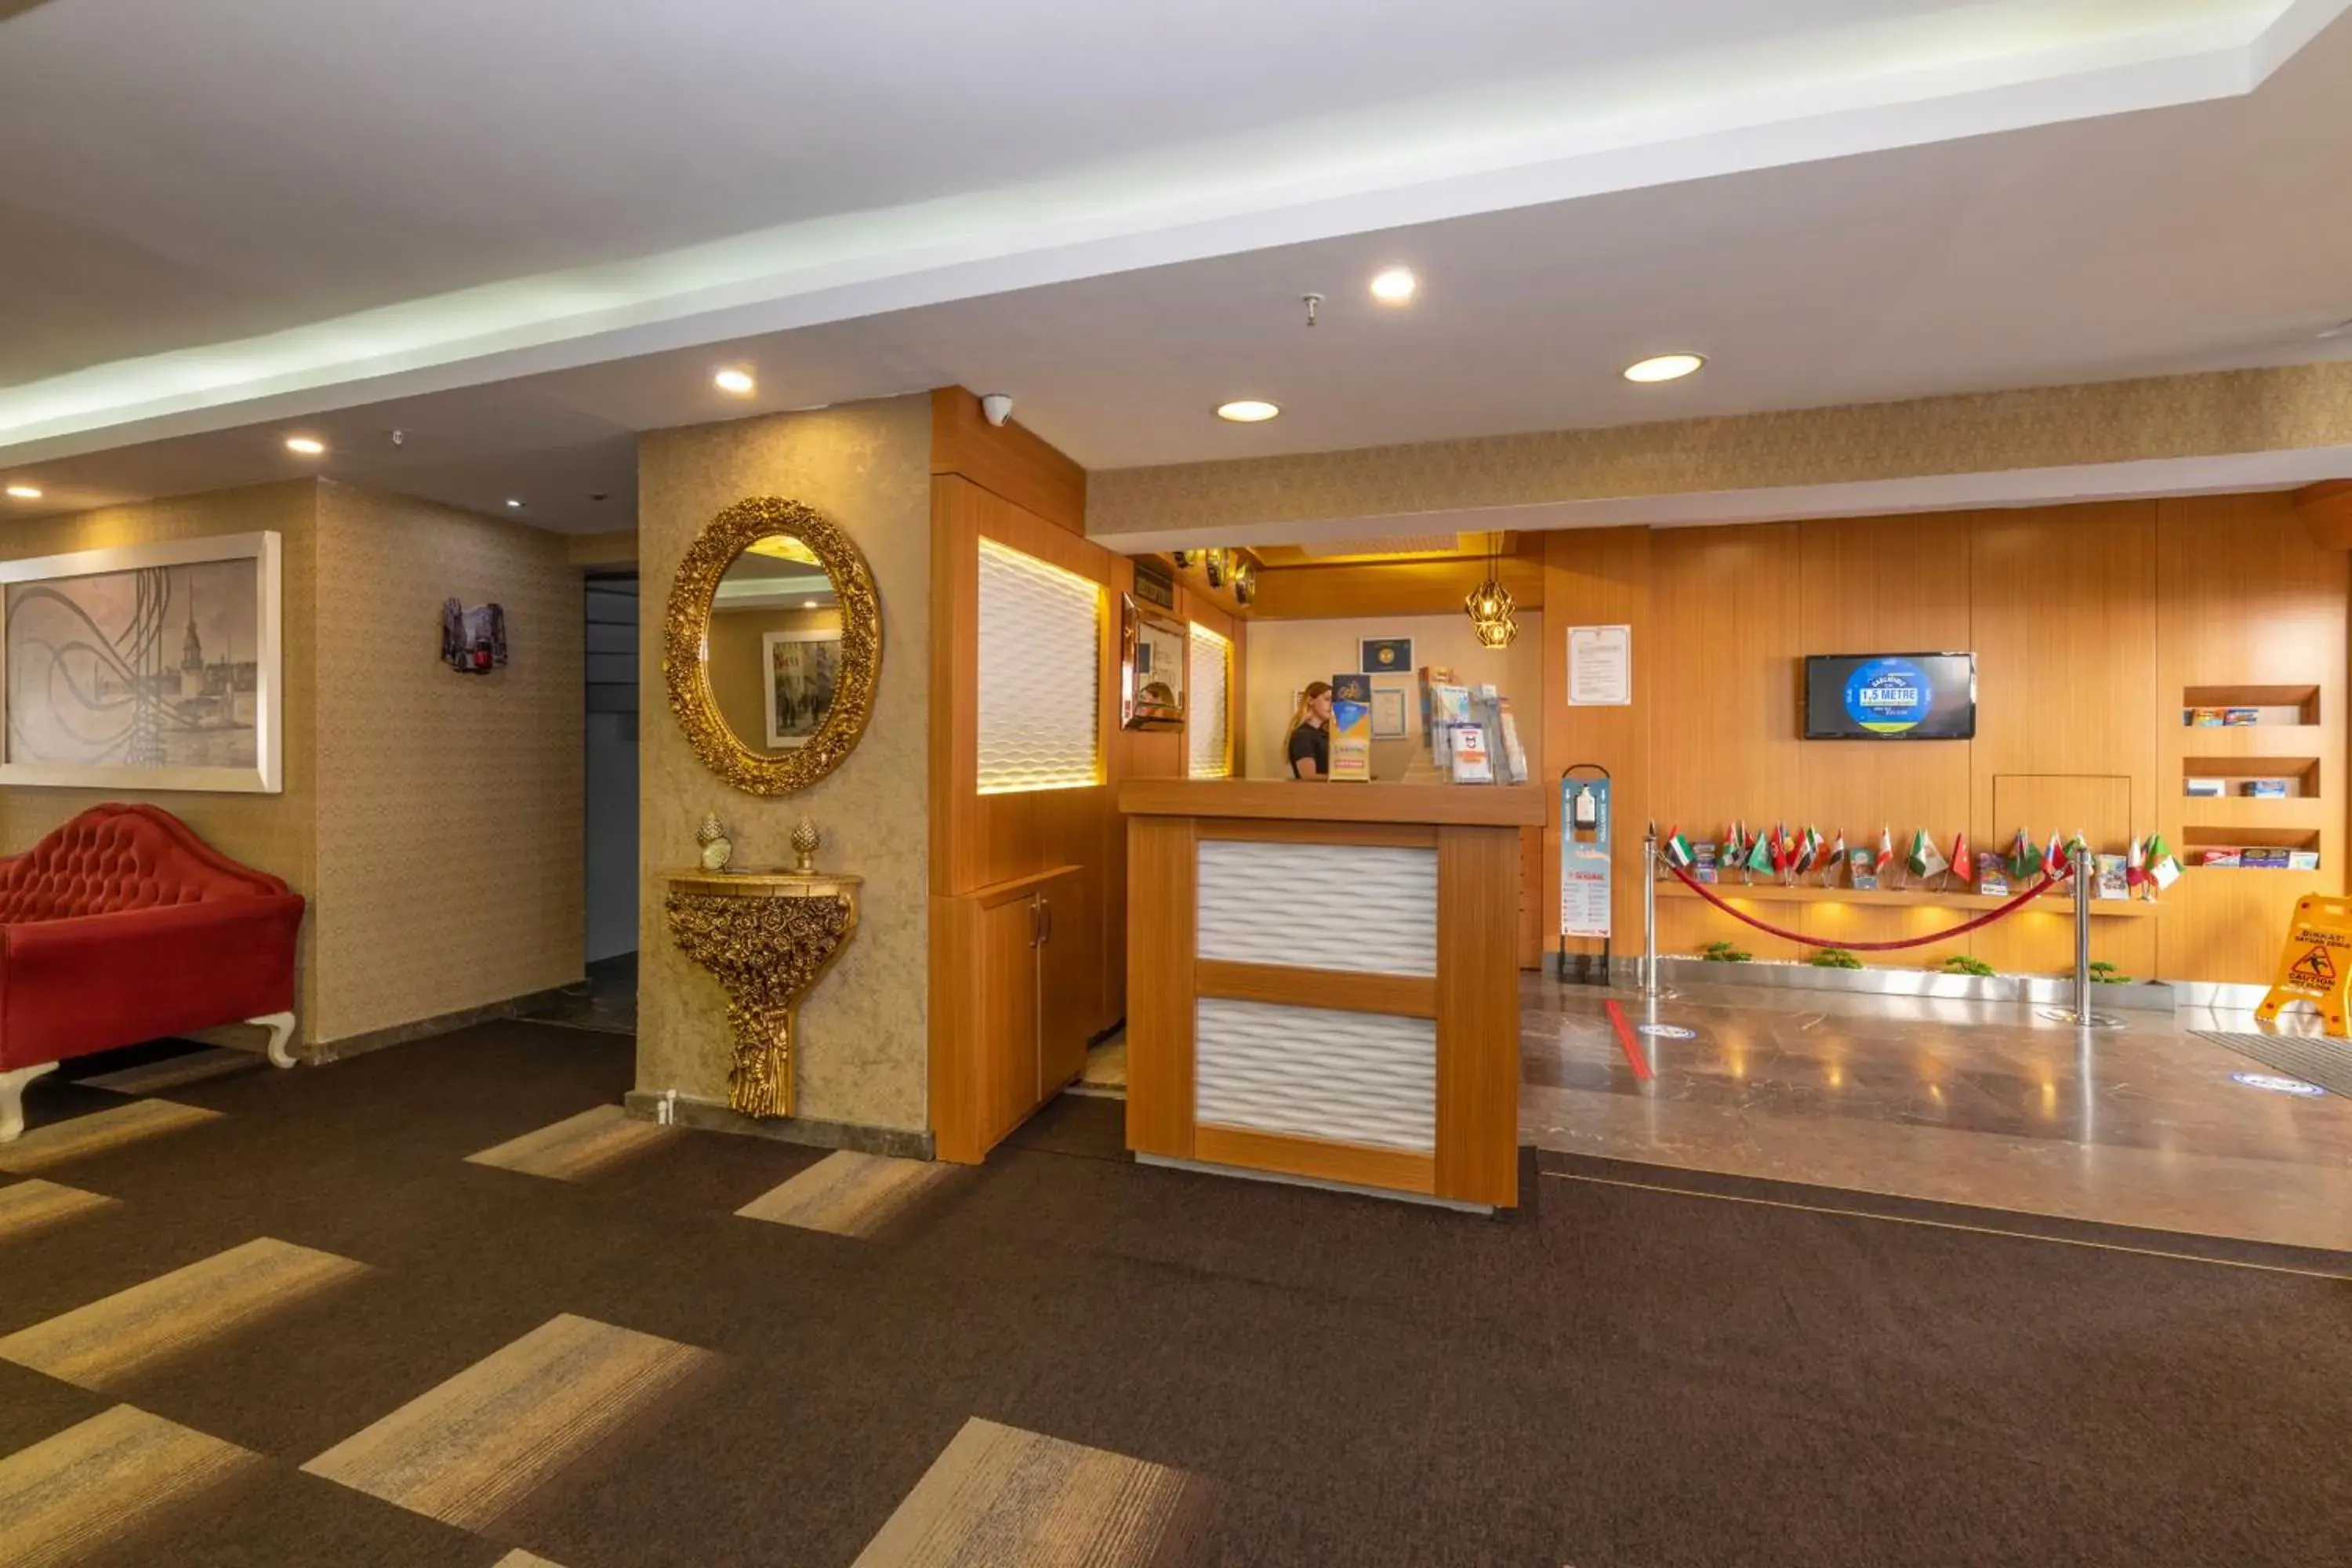 Lobby or reception in Regno Hotel